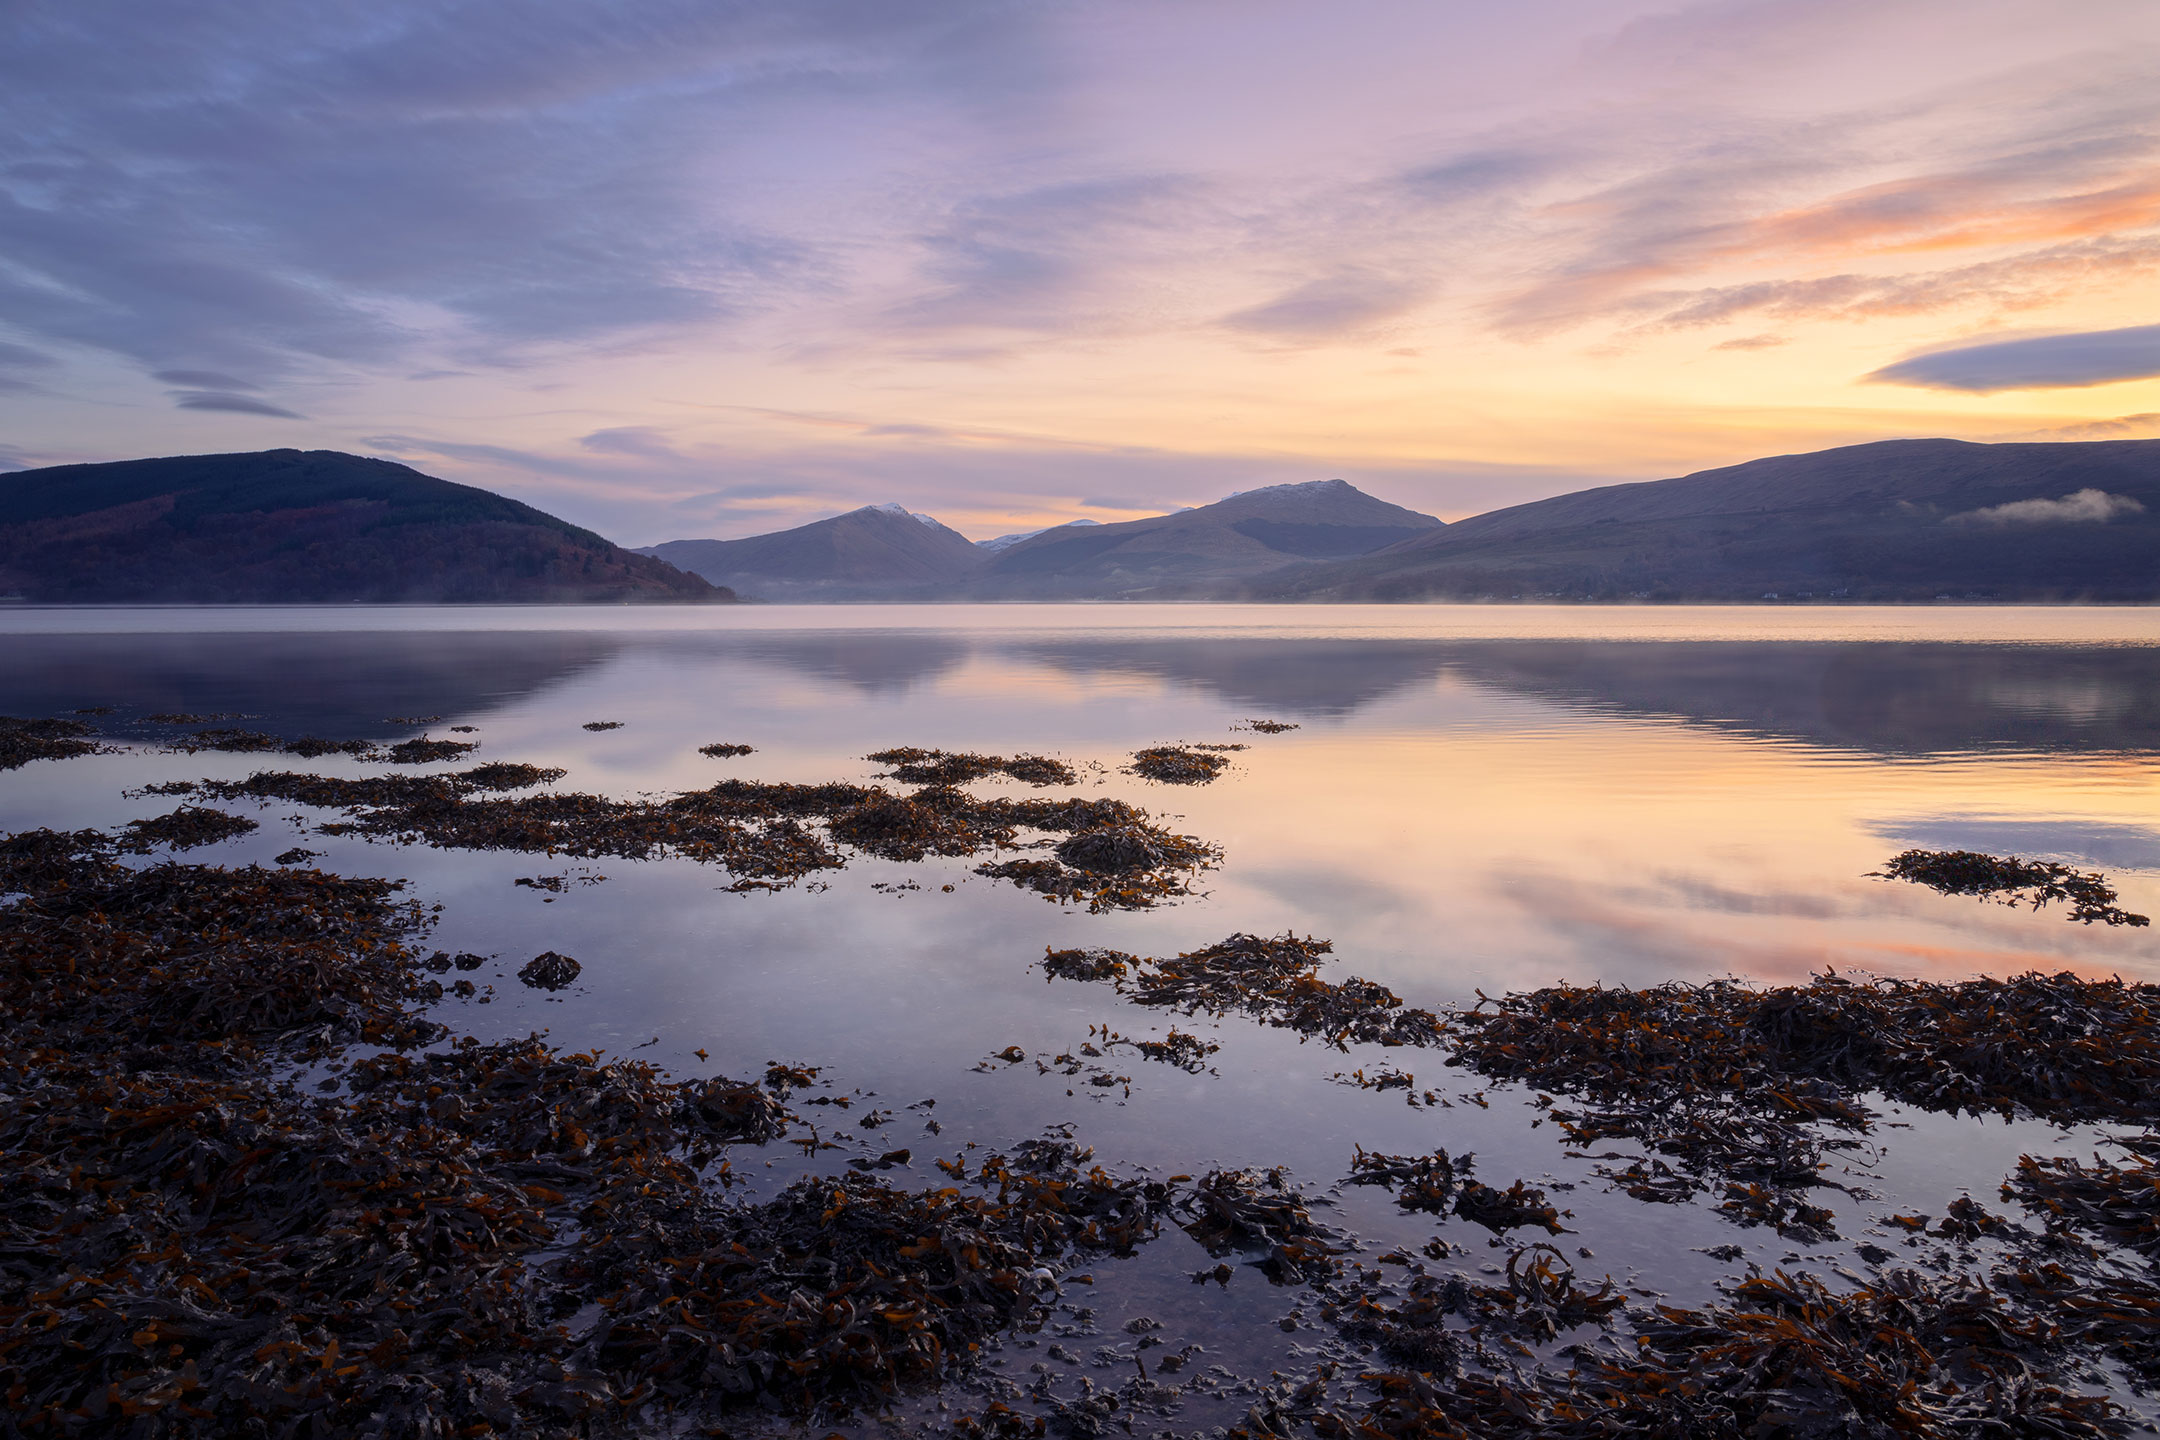 A peaceful sunrise at Loch Fyne, Inveraray, Scotland